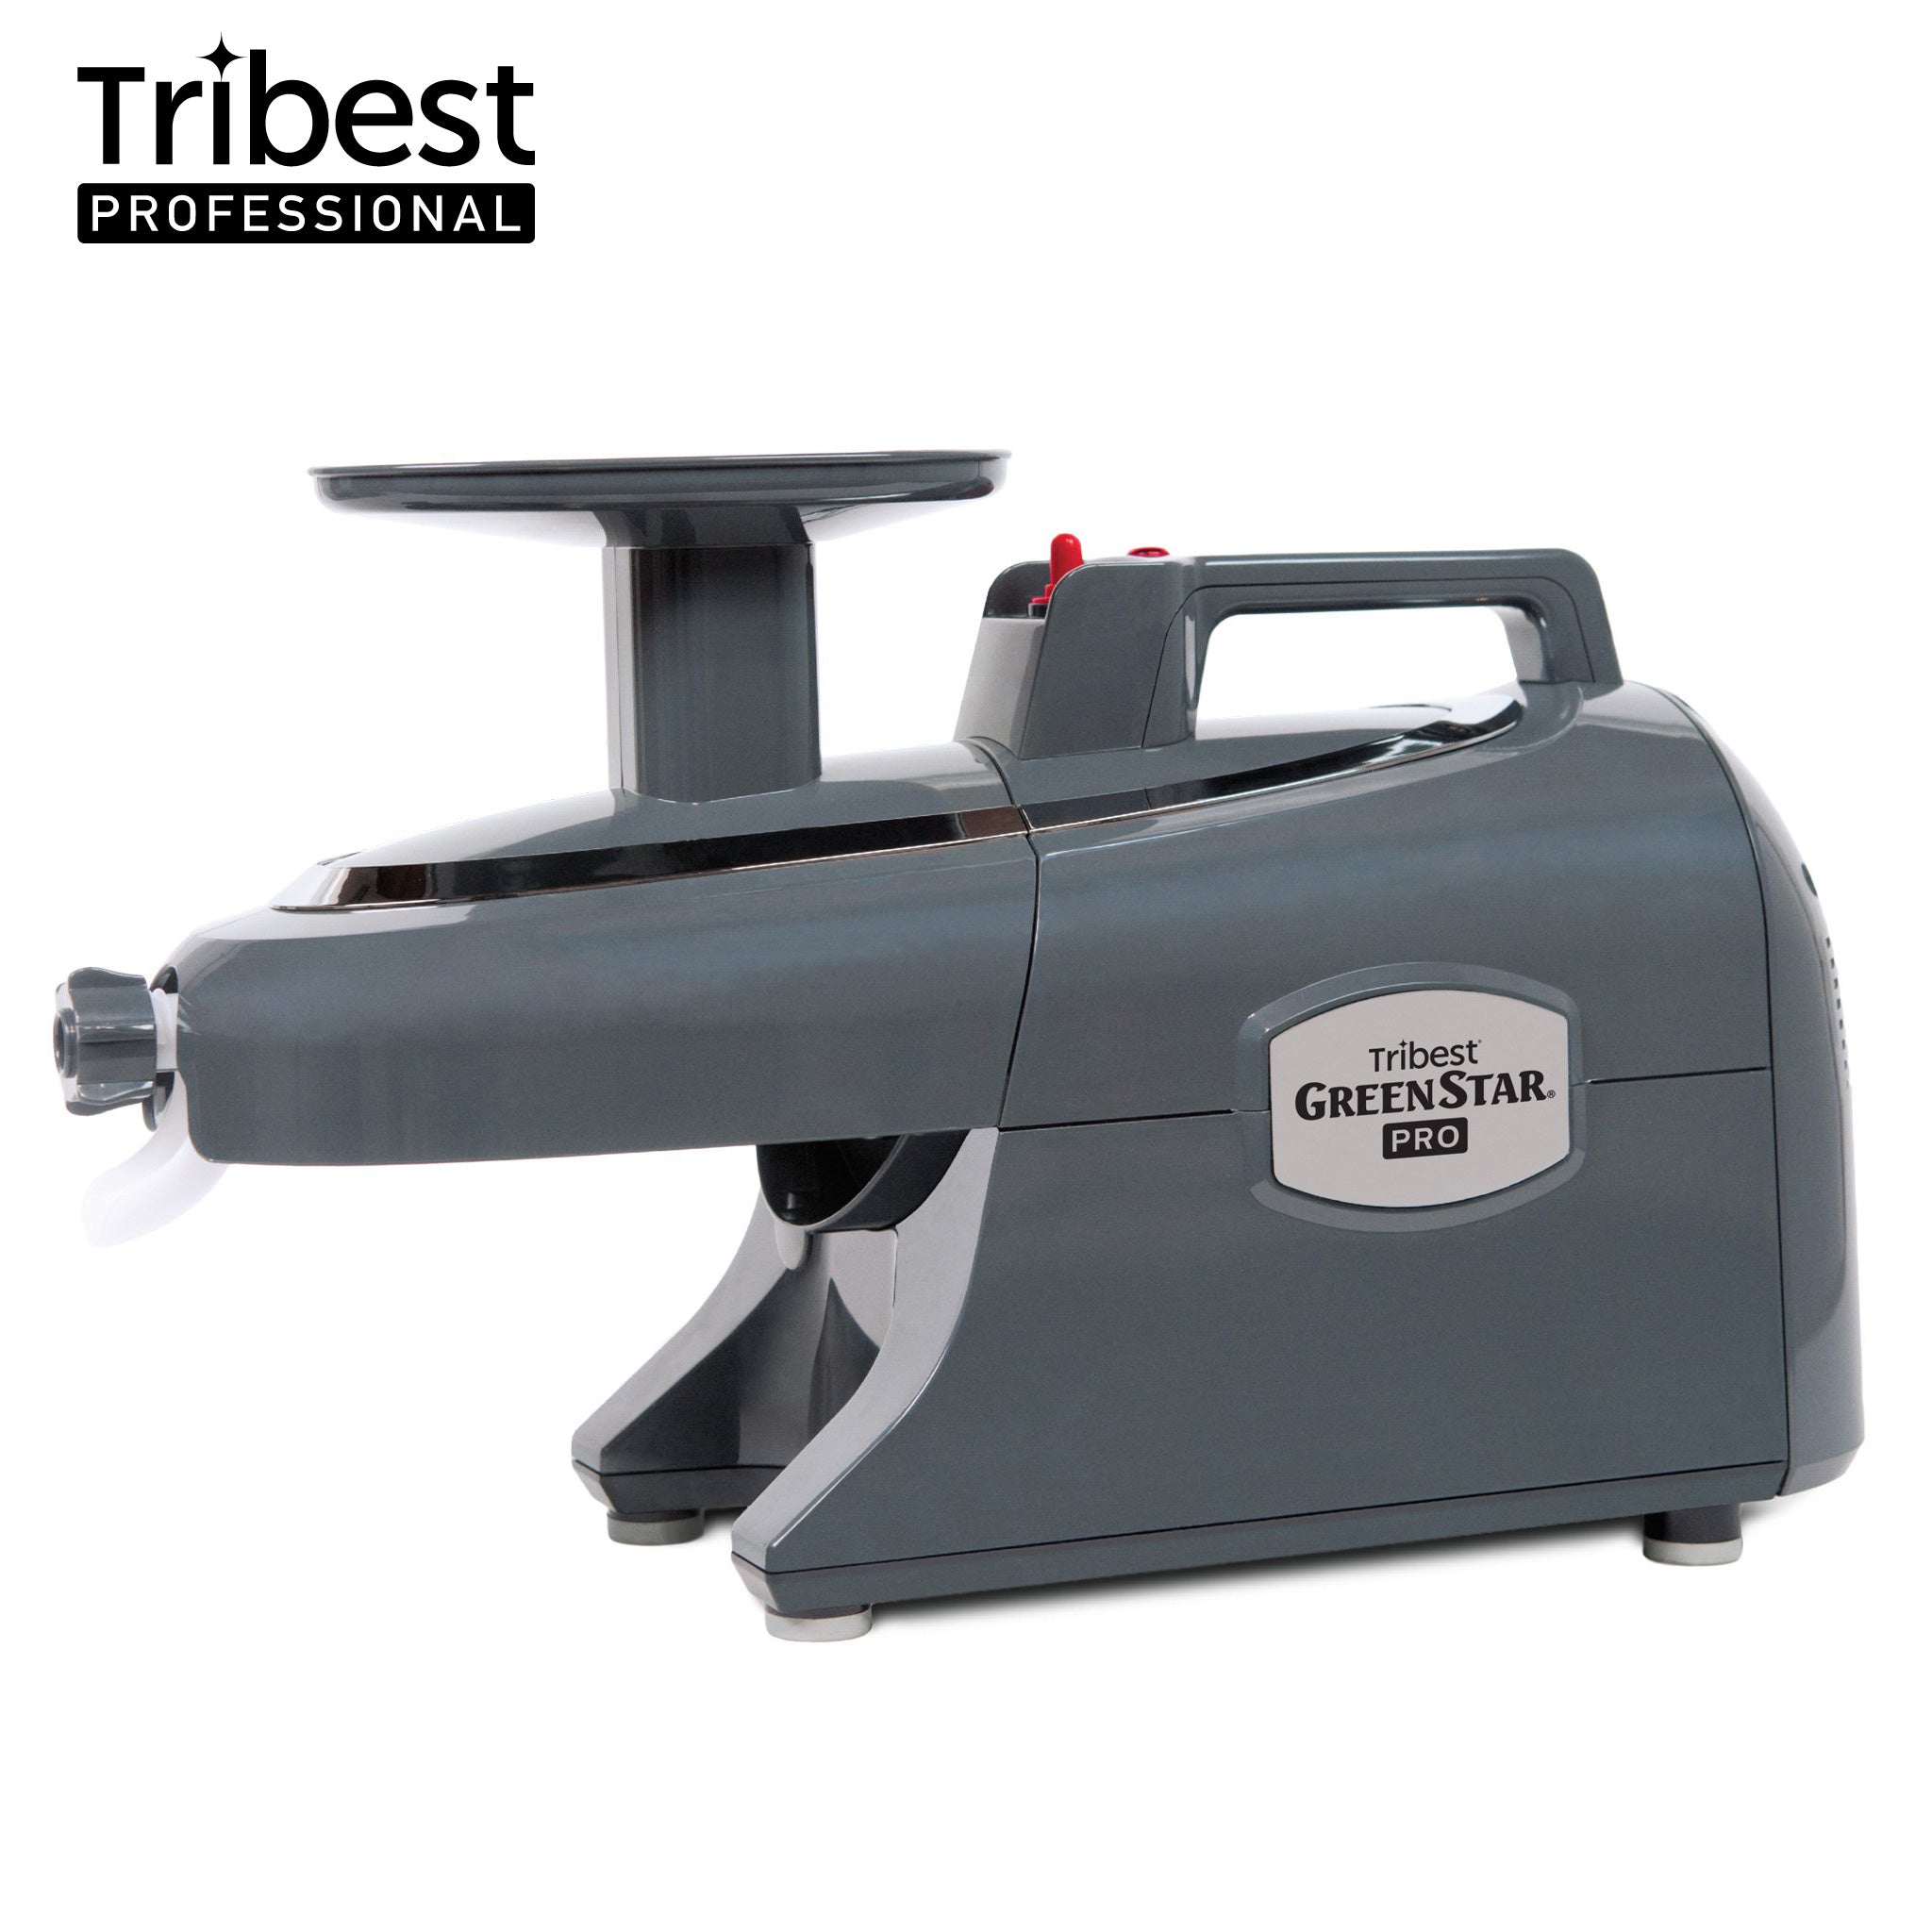 Greenstar® Pro Twin Gear Commercial Slow Juicer in Gray GS-P502 - Tribest